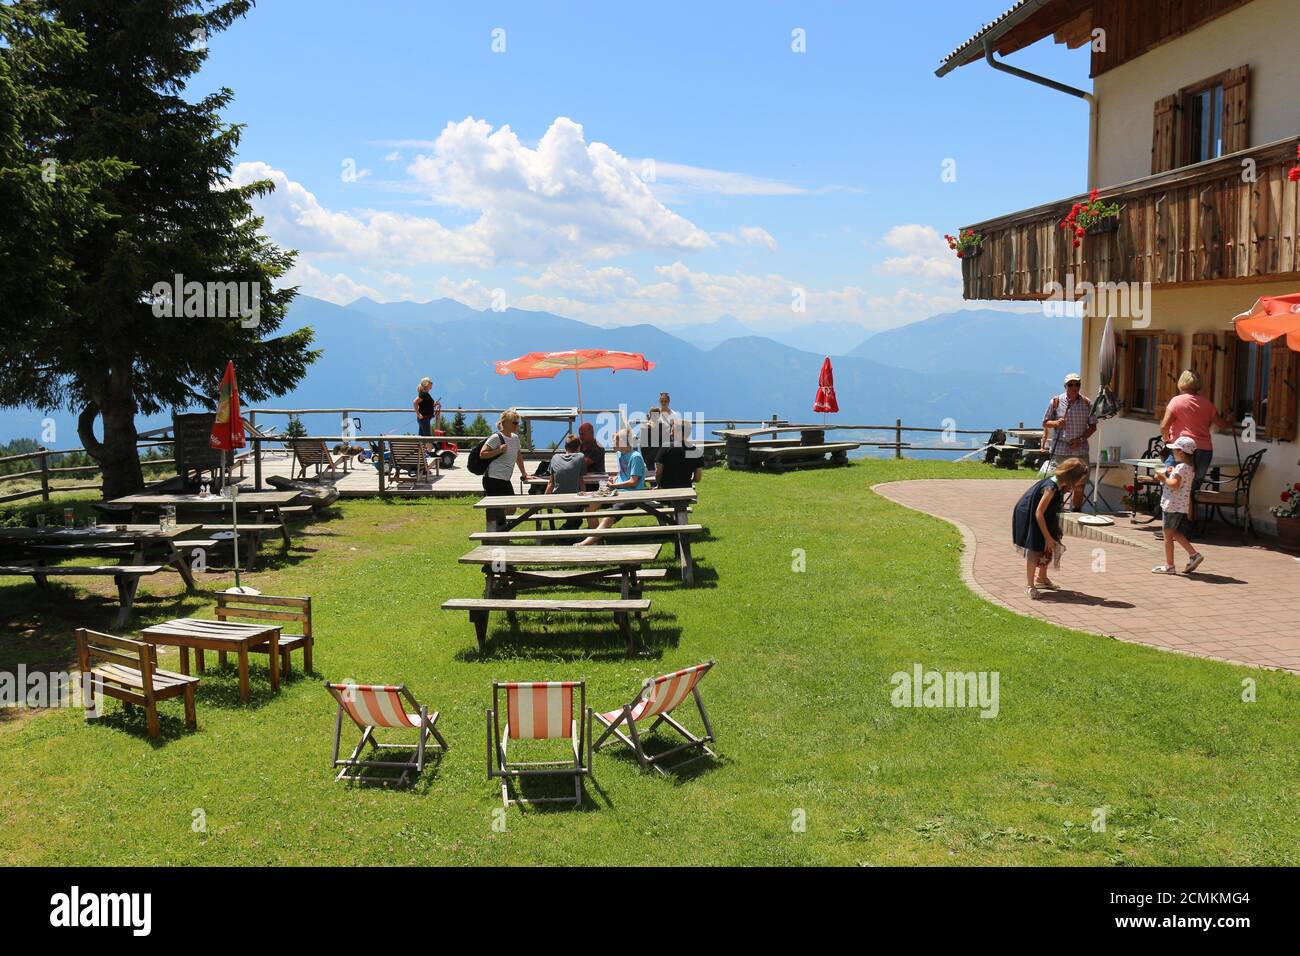 Alpine restaurant on Sommeregger alm, height 1720 m, above the Millstatt lake. Beautiful mountain landscape around. Austria, Europe. Stock Photo